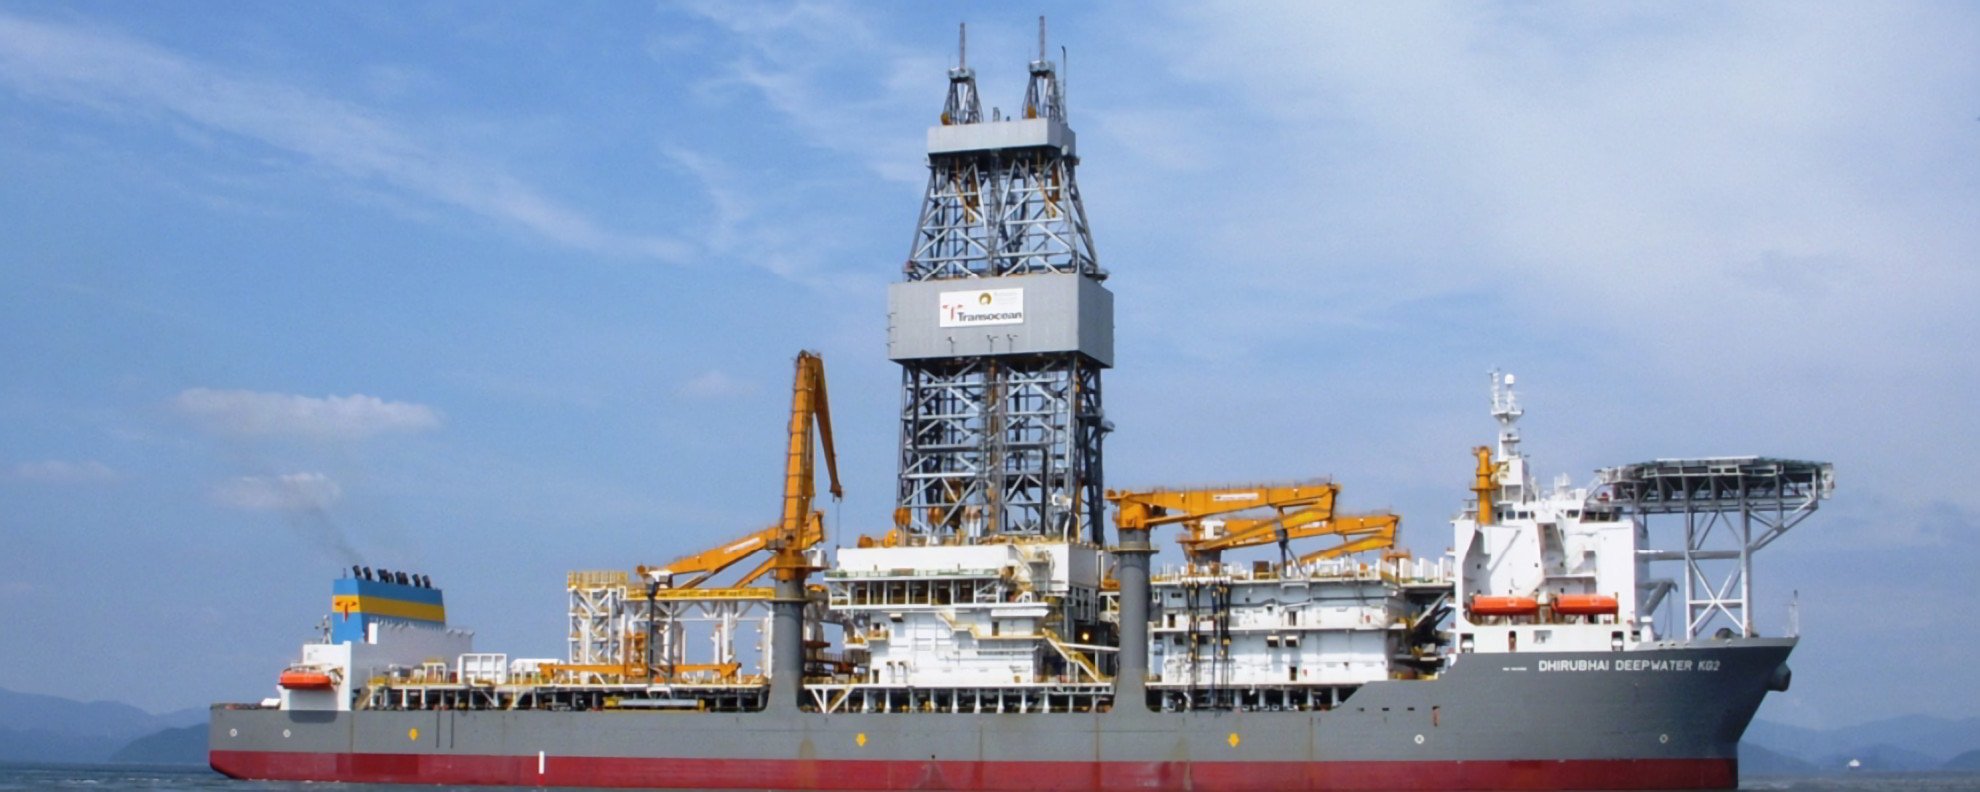 Dhirubhai Deepwater KG2 drillship; Source: Transocean